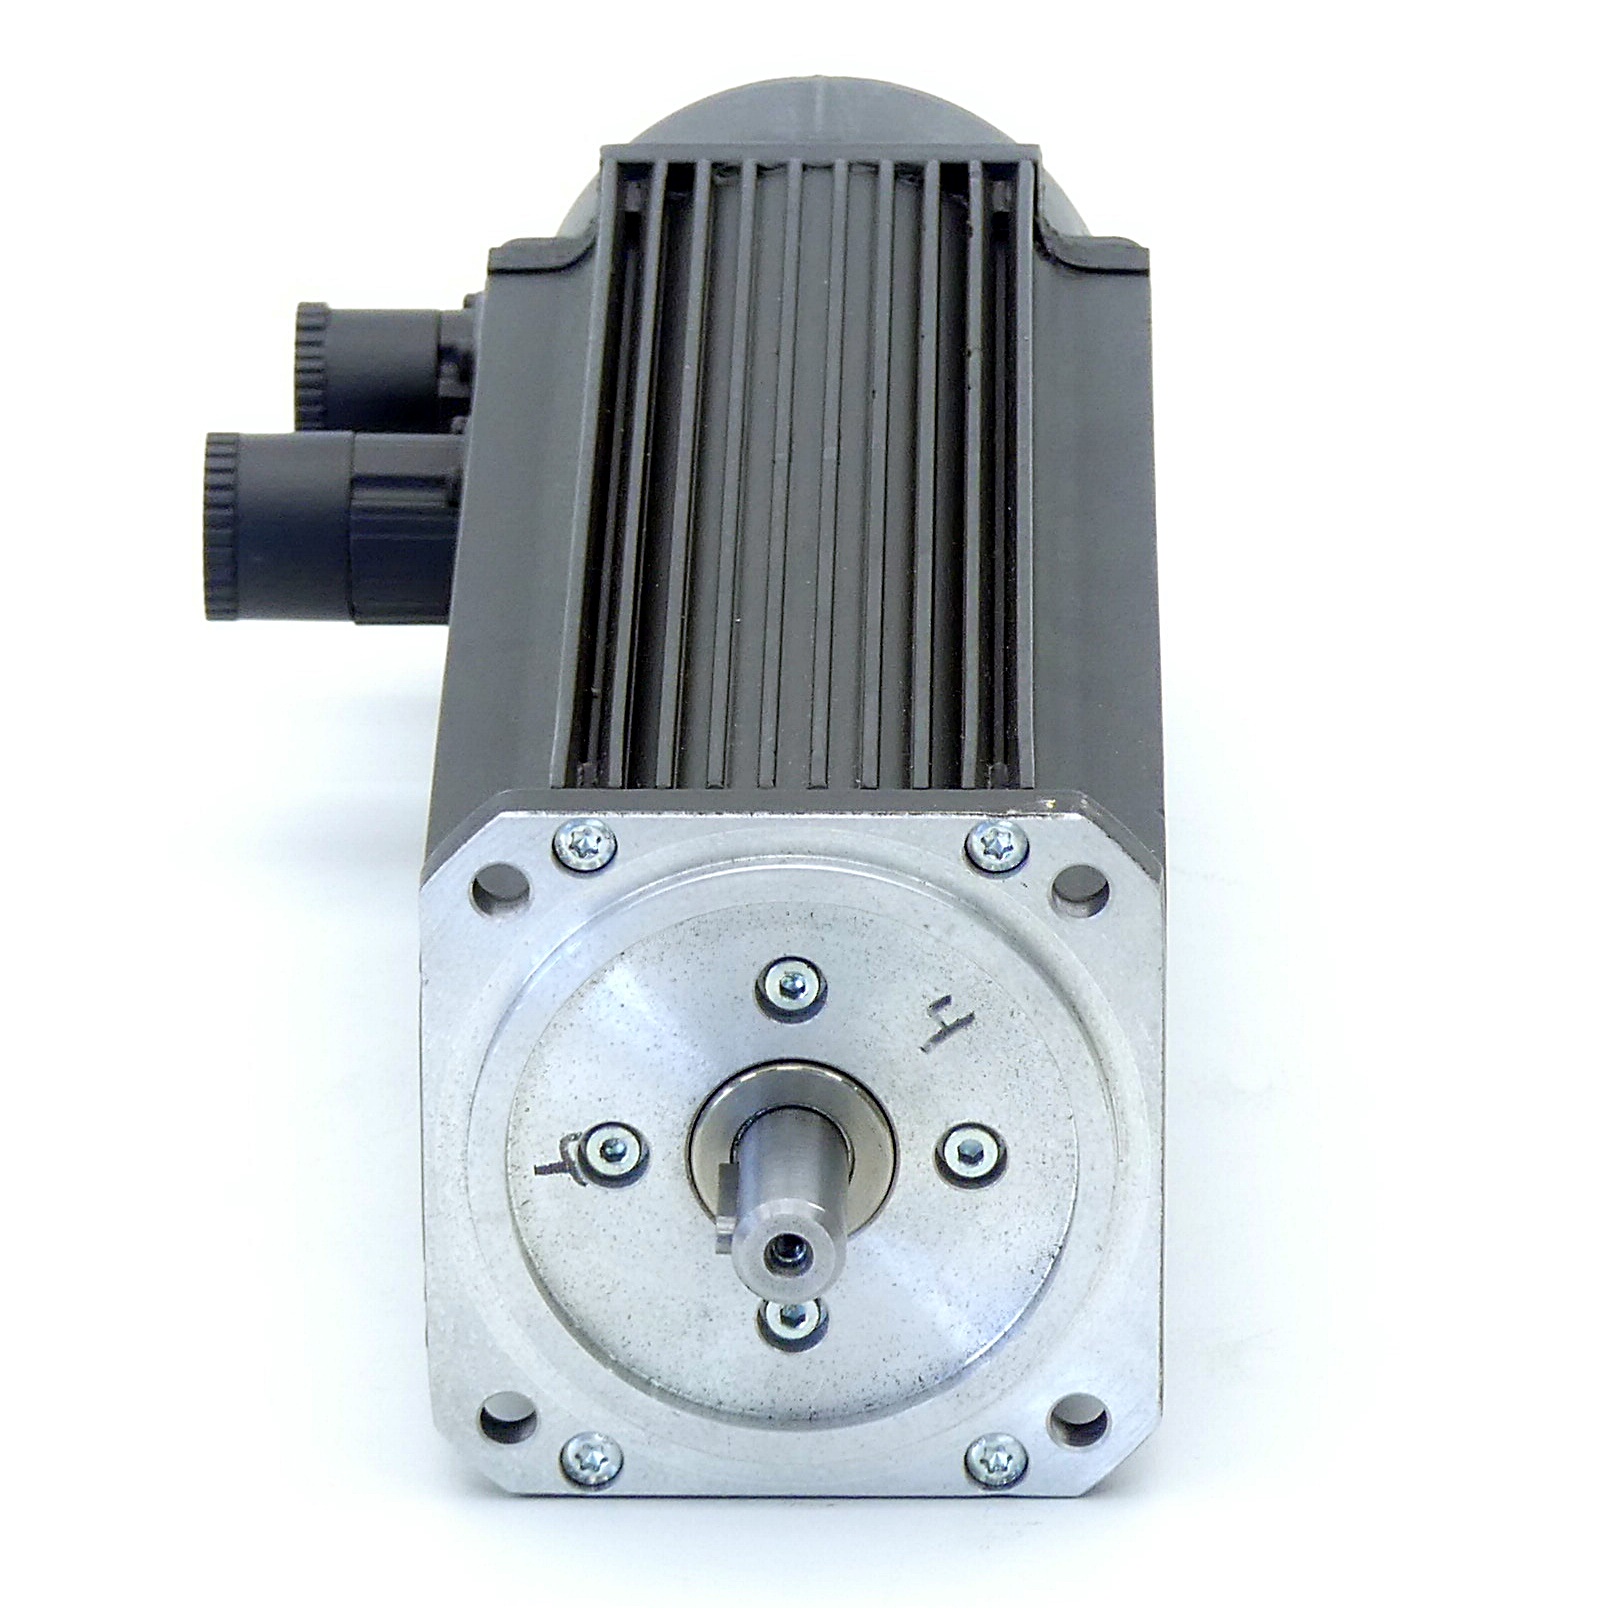 Step motor DSM4-09.4-24I.B4-6NG 